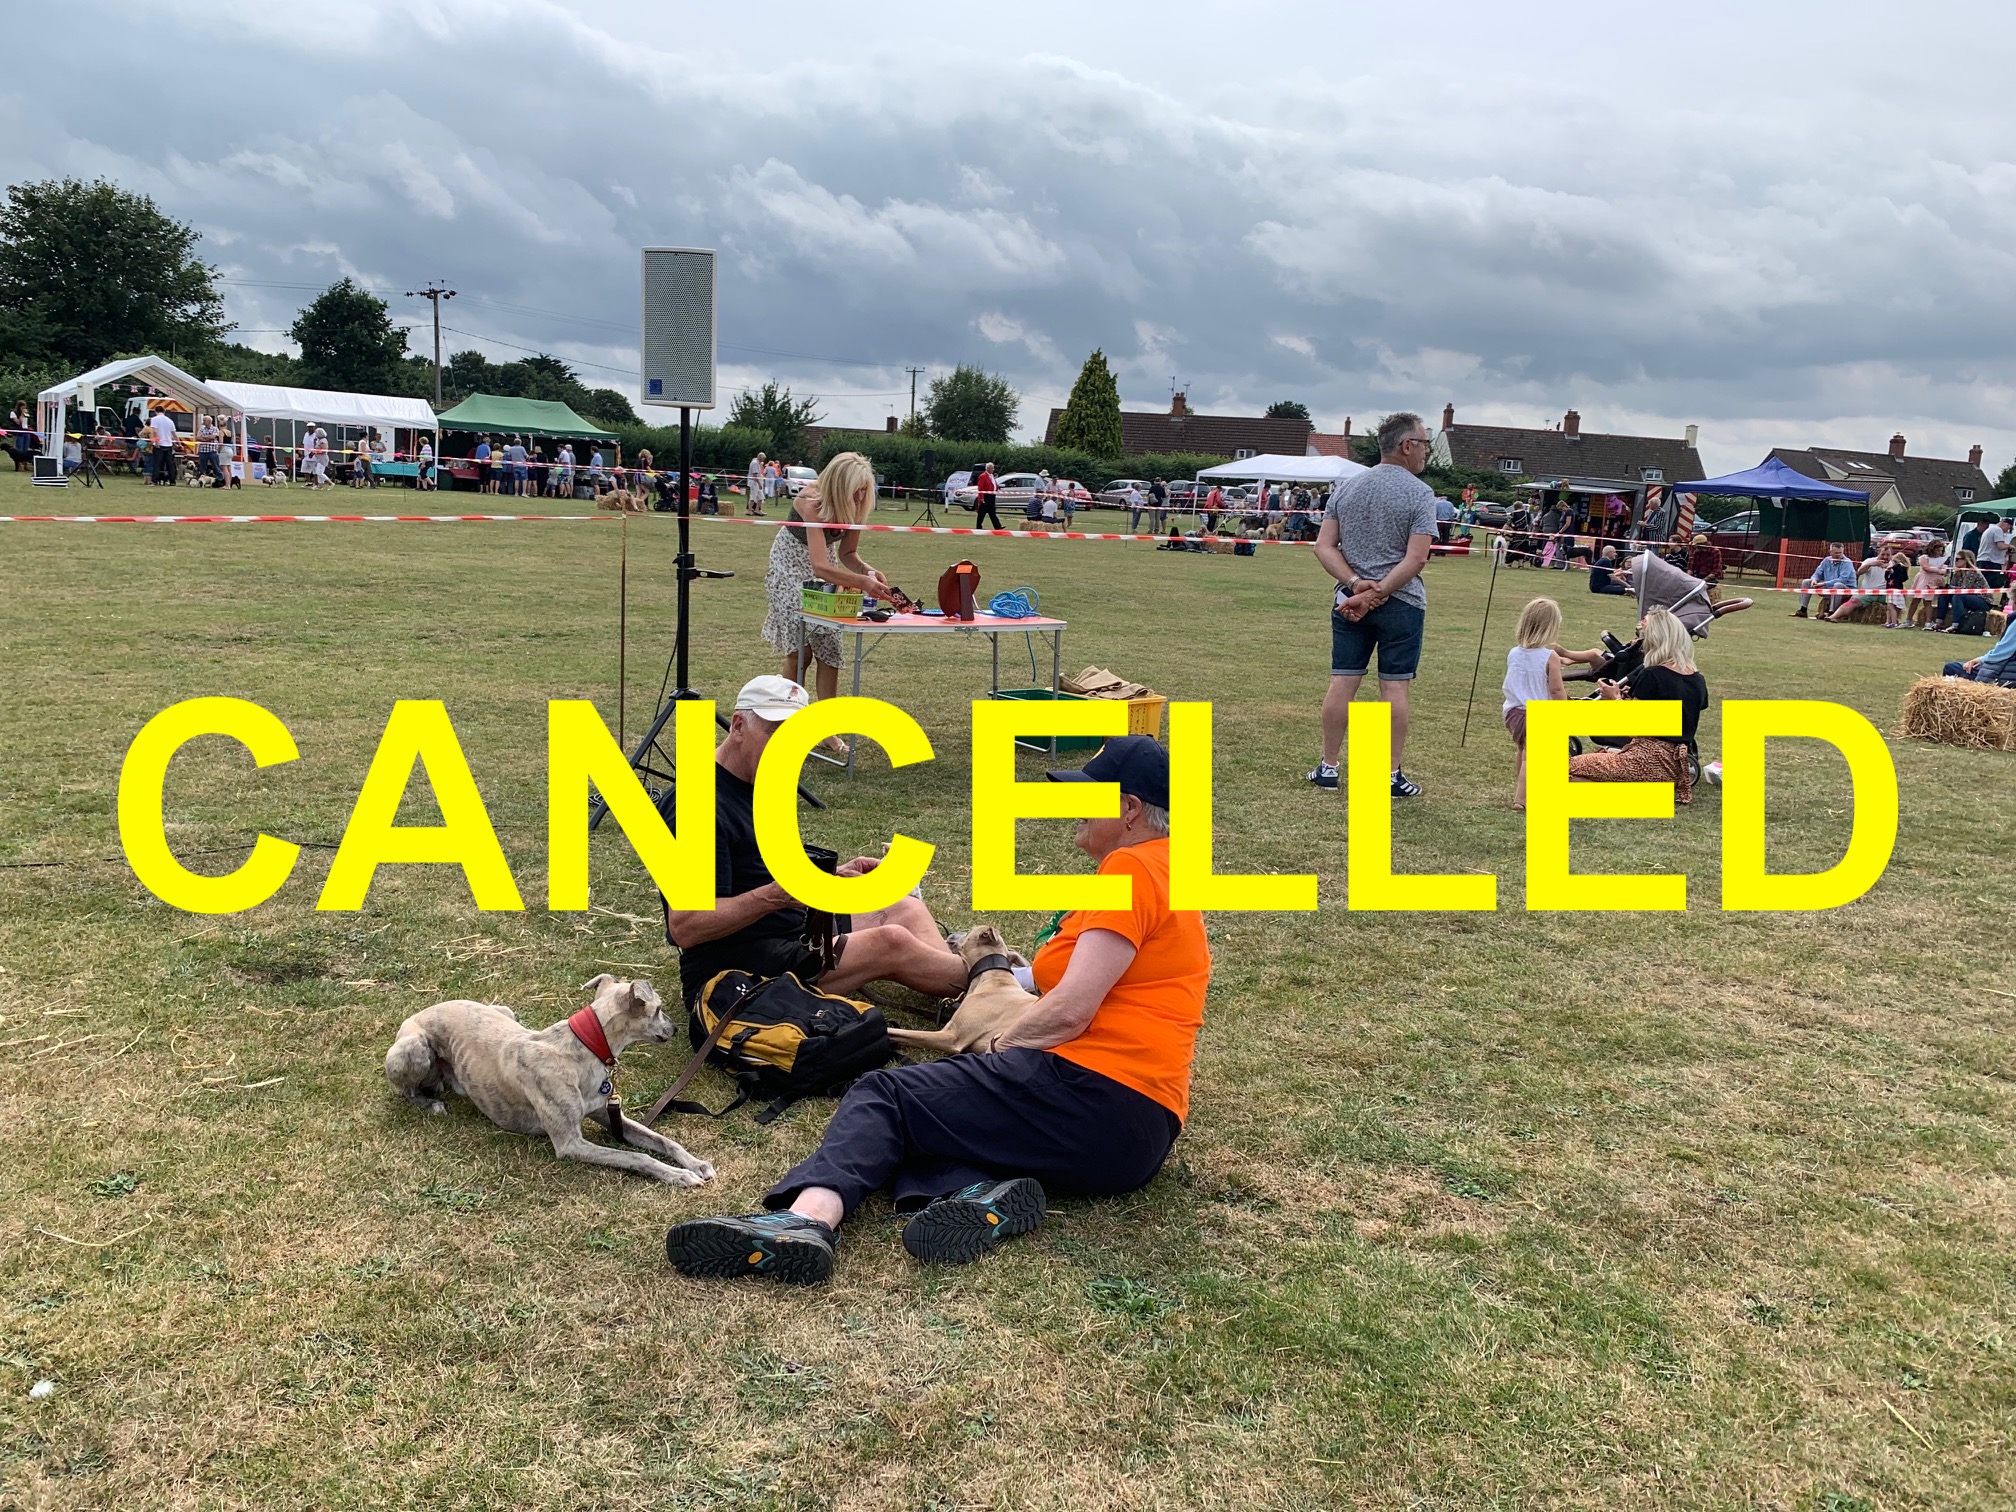 Snape Village Fête (Fun Day) cancelled